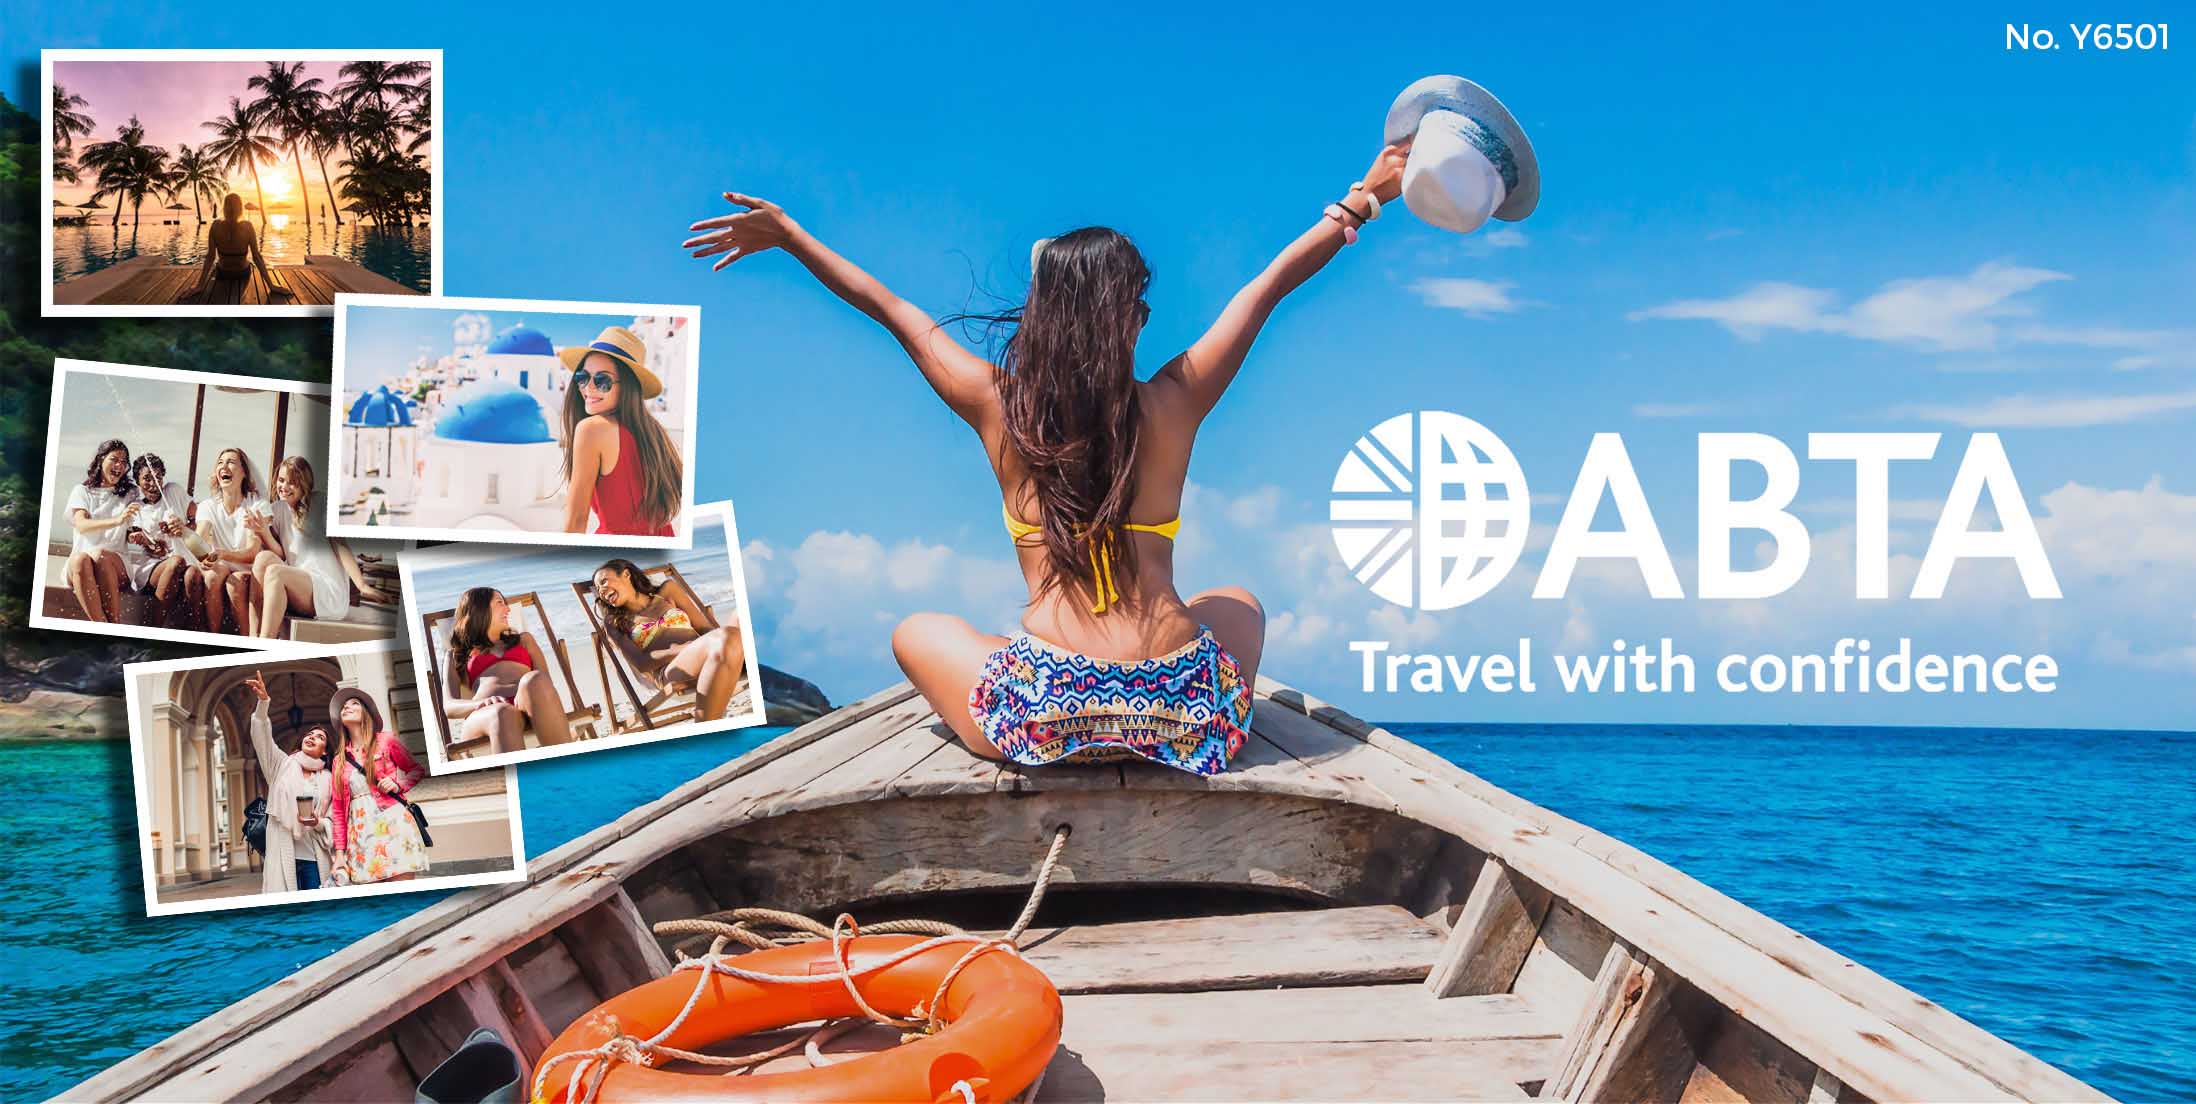 abta travel agency